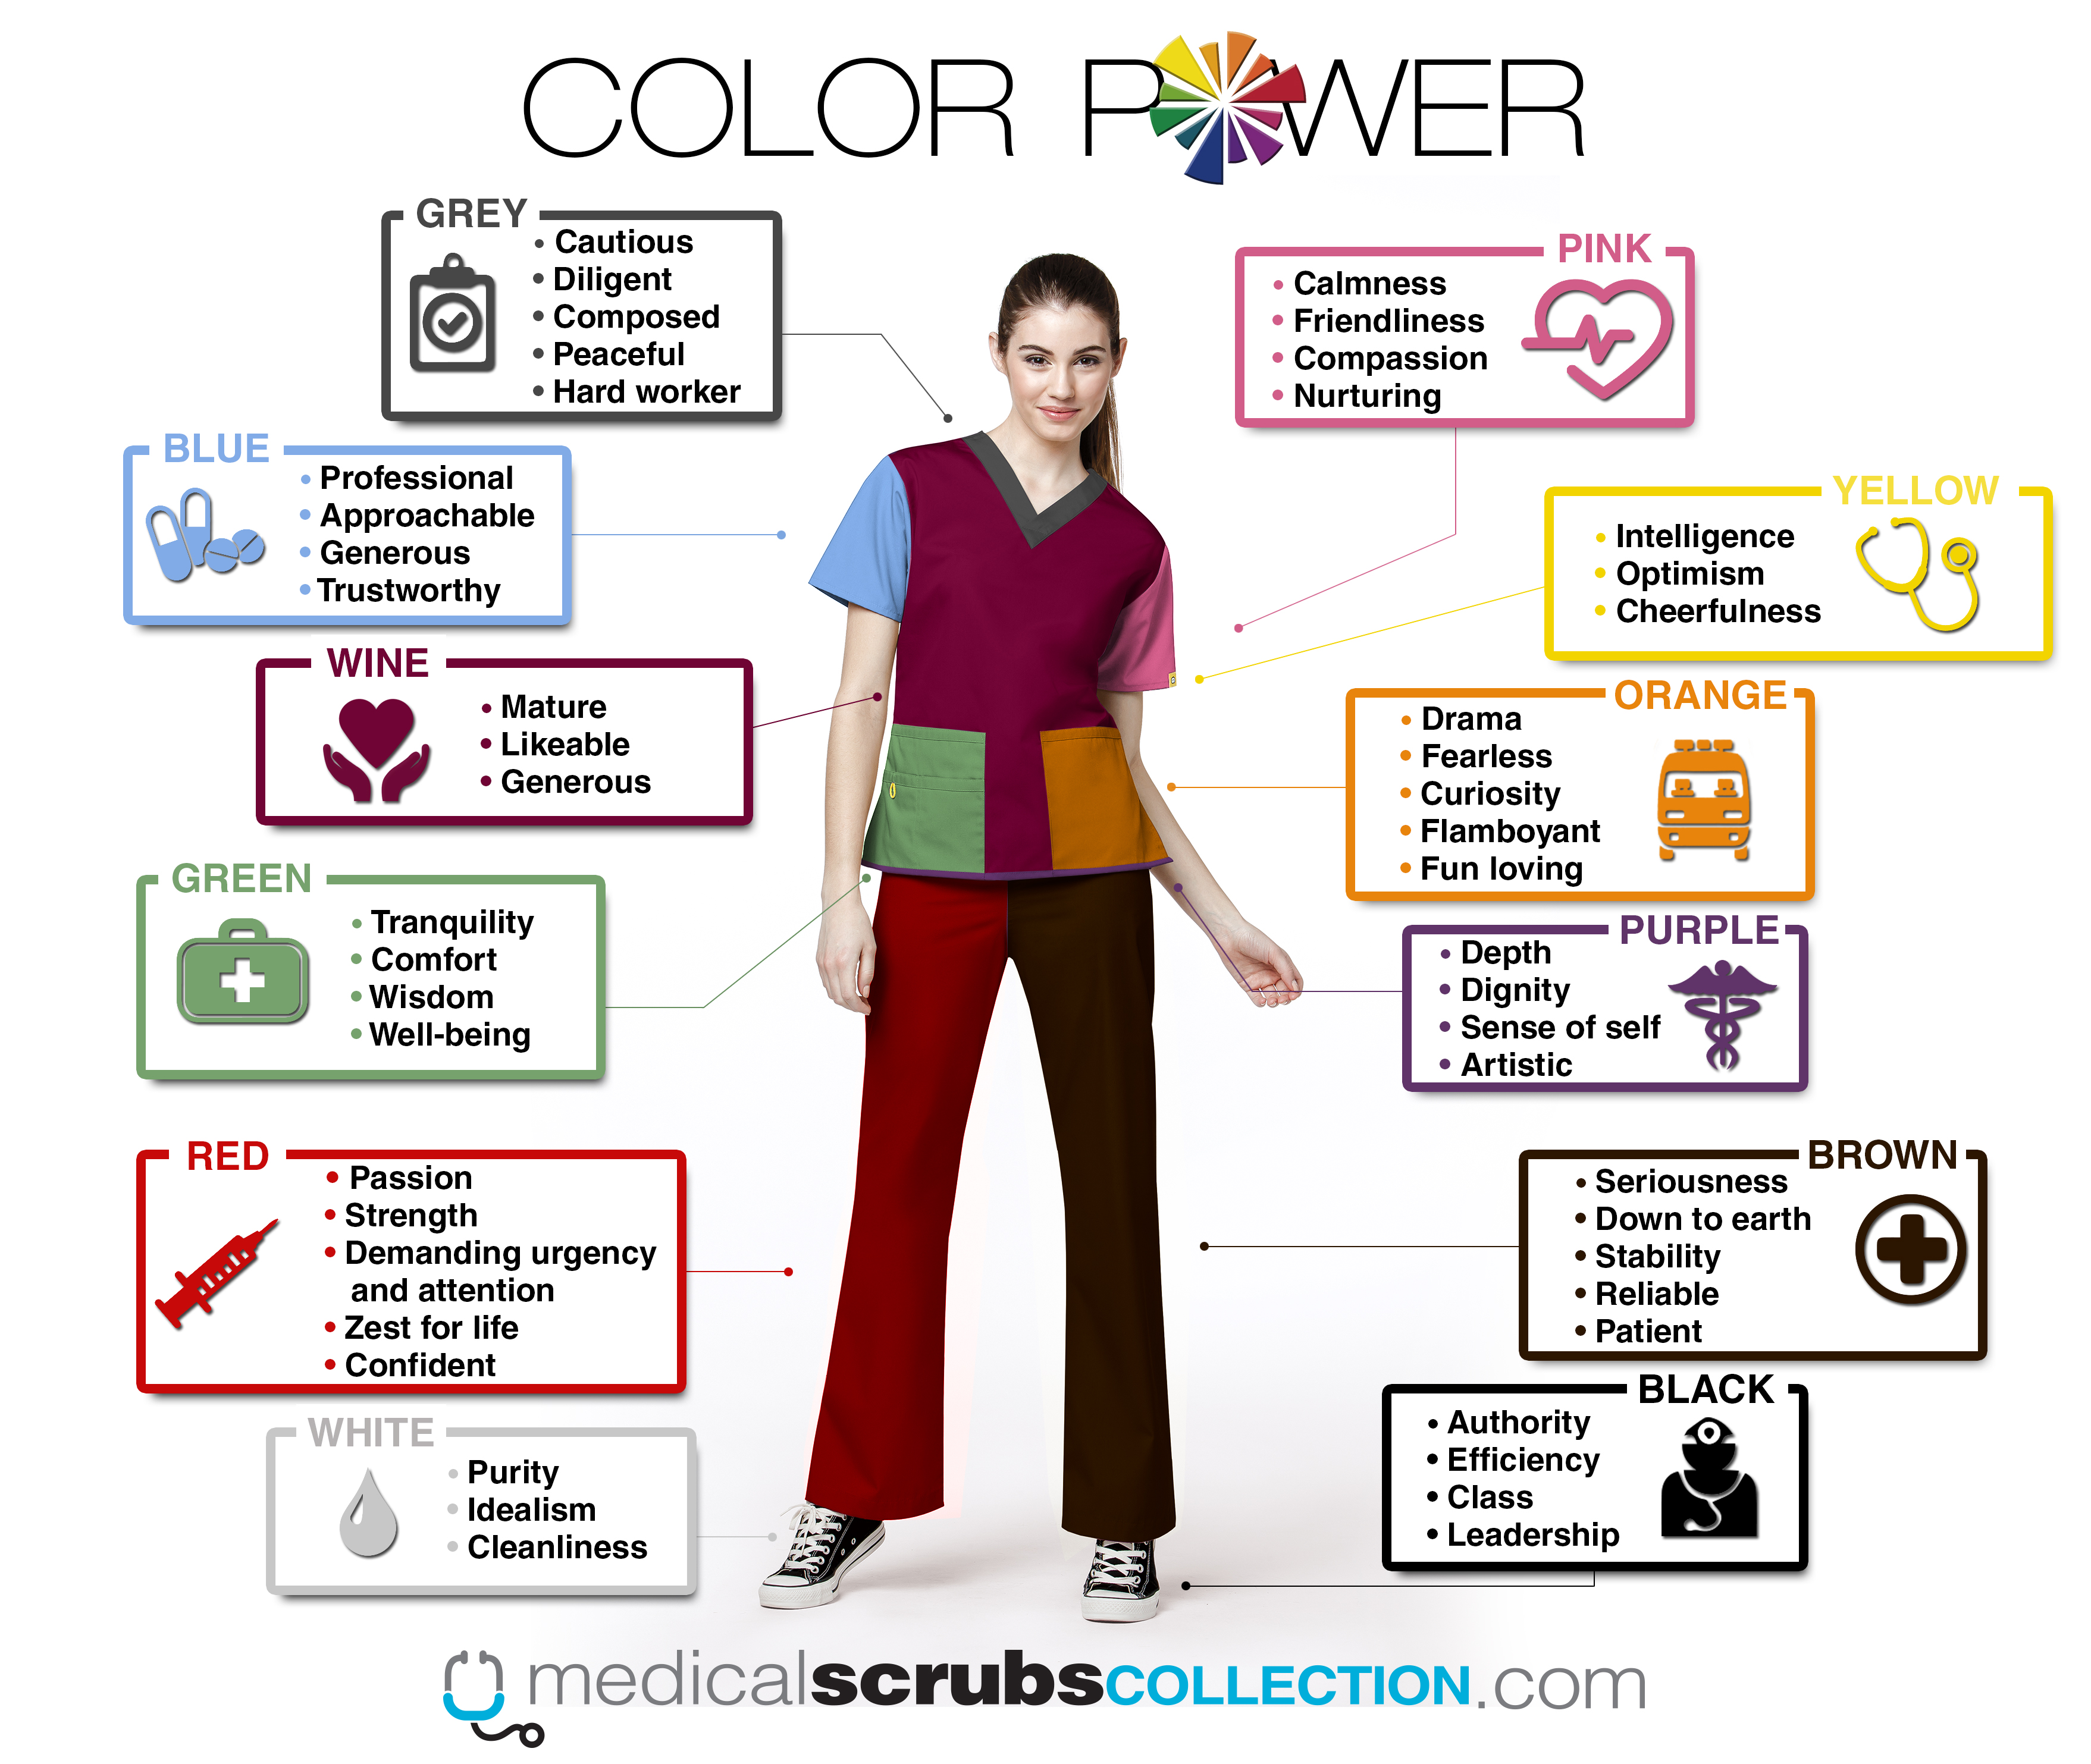 Color Power